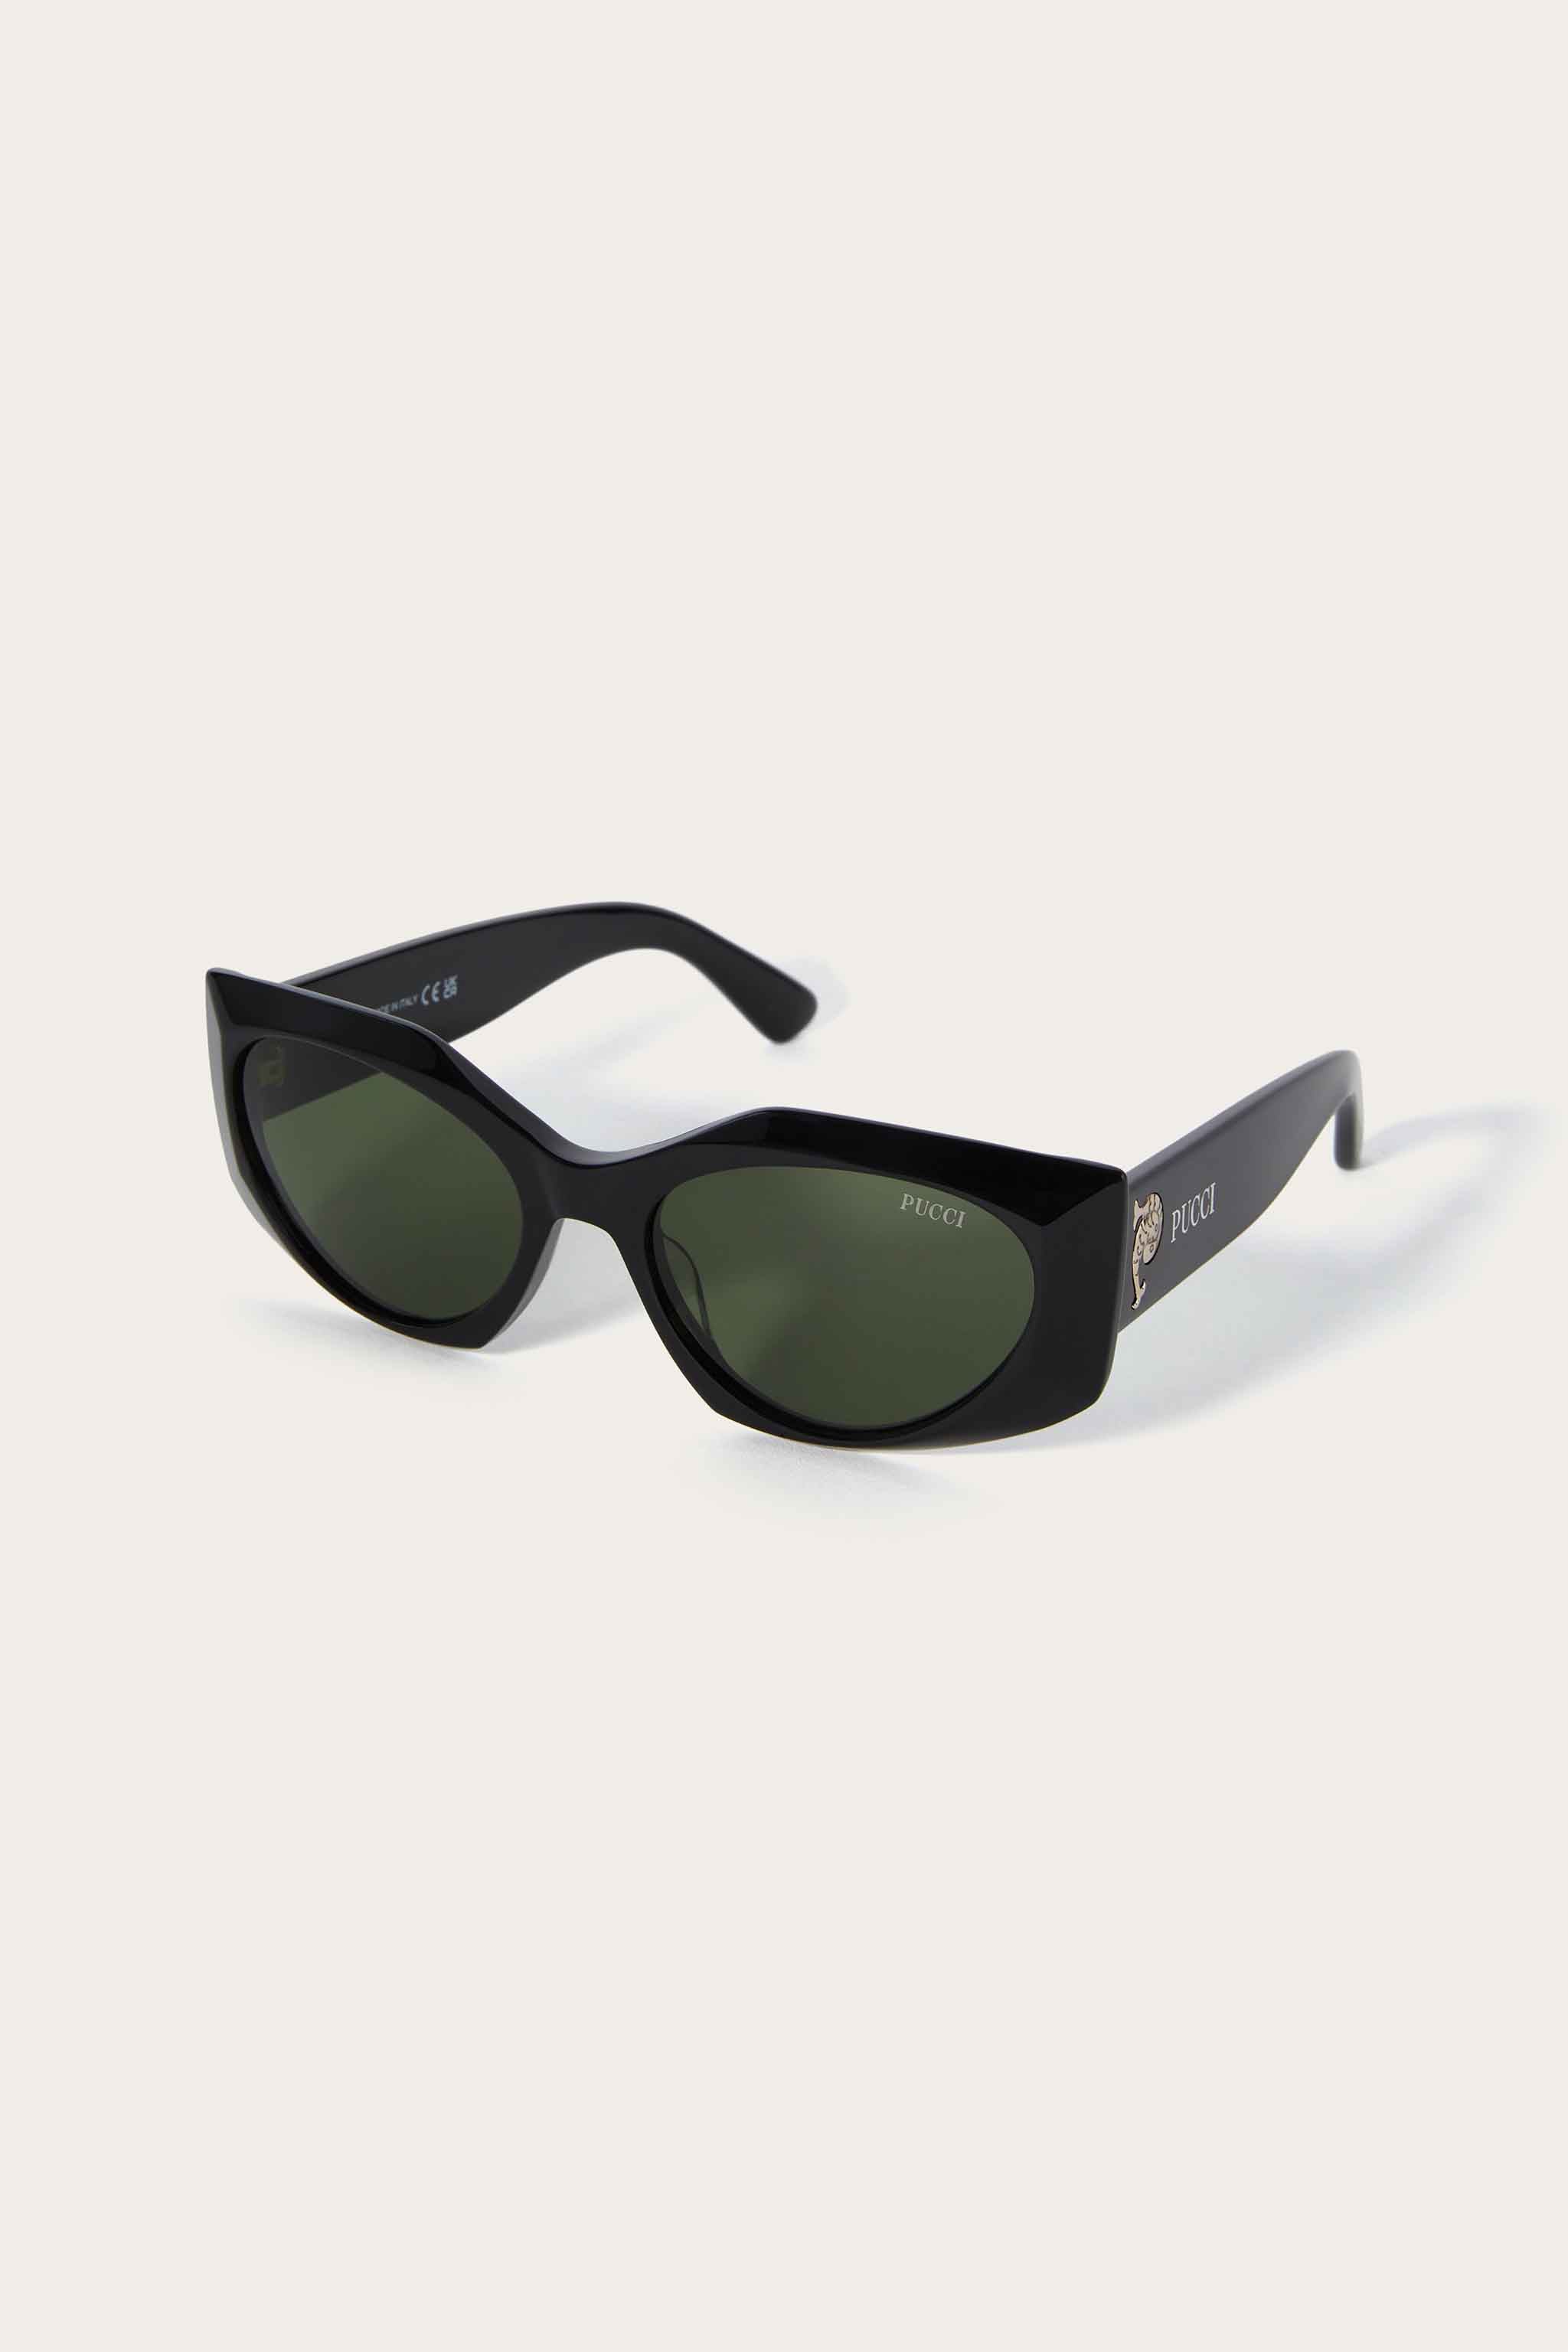 Buy Quay Eyeware Brown Rectangular Sunglasses (QEFLB001306) at Amazon.in